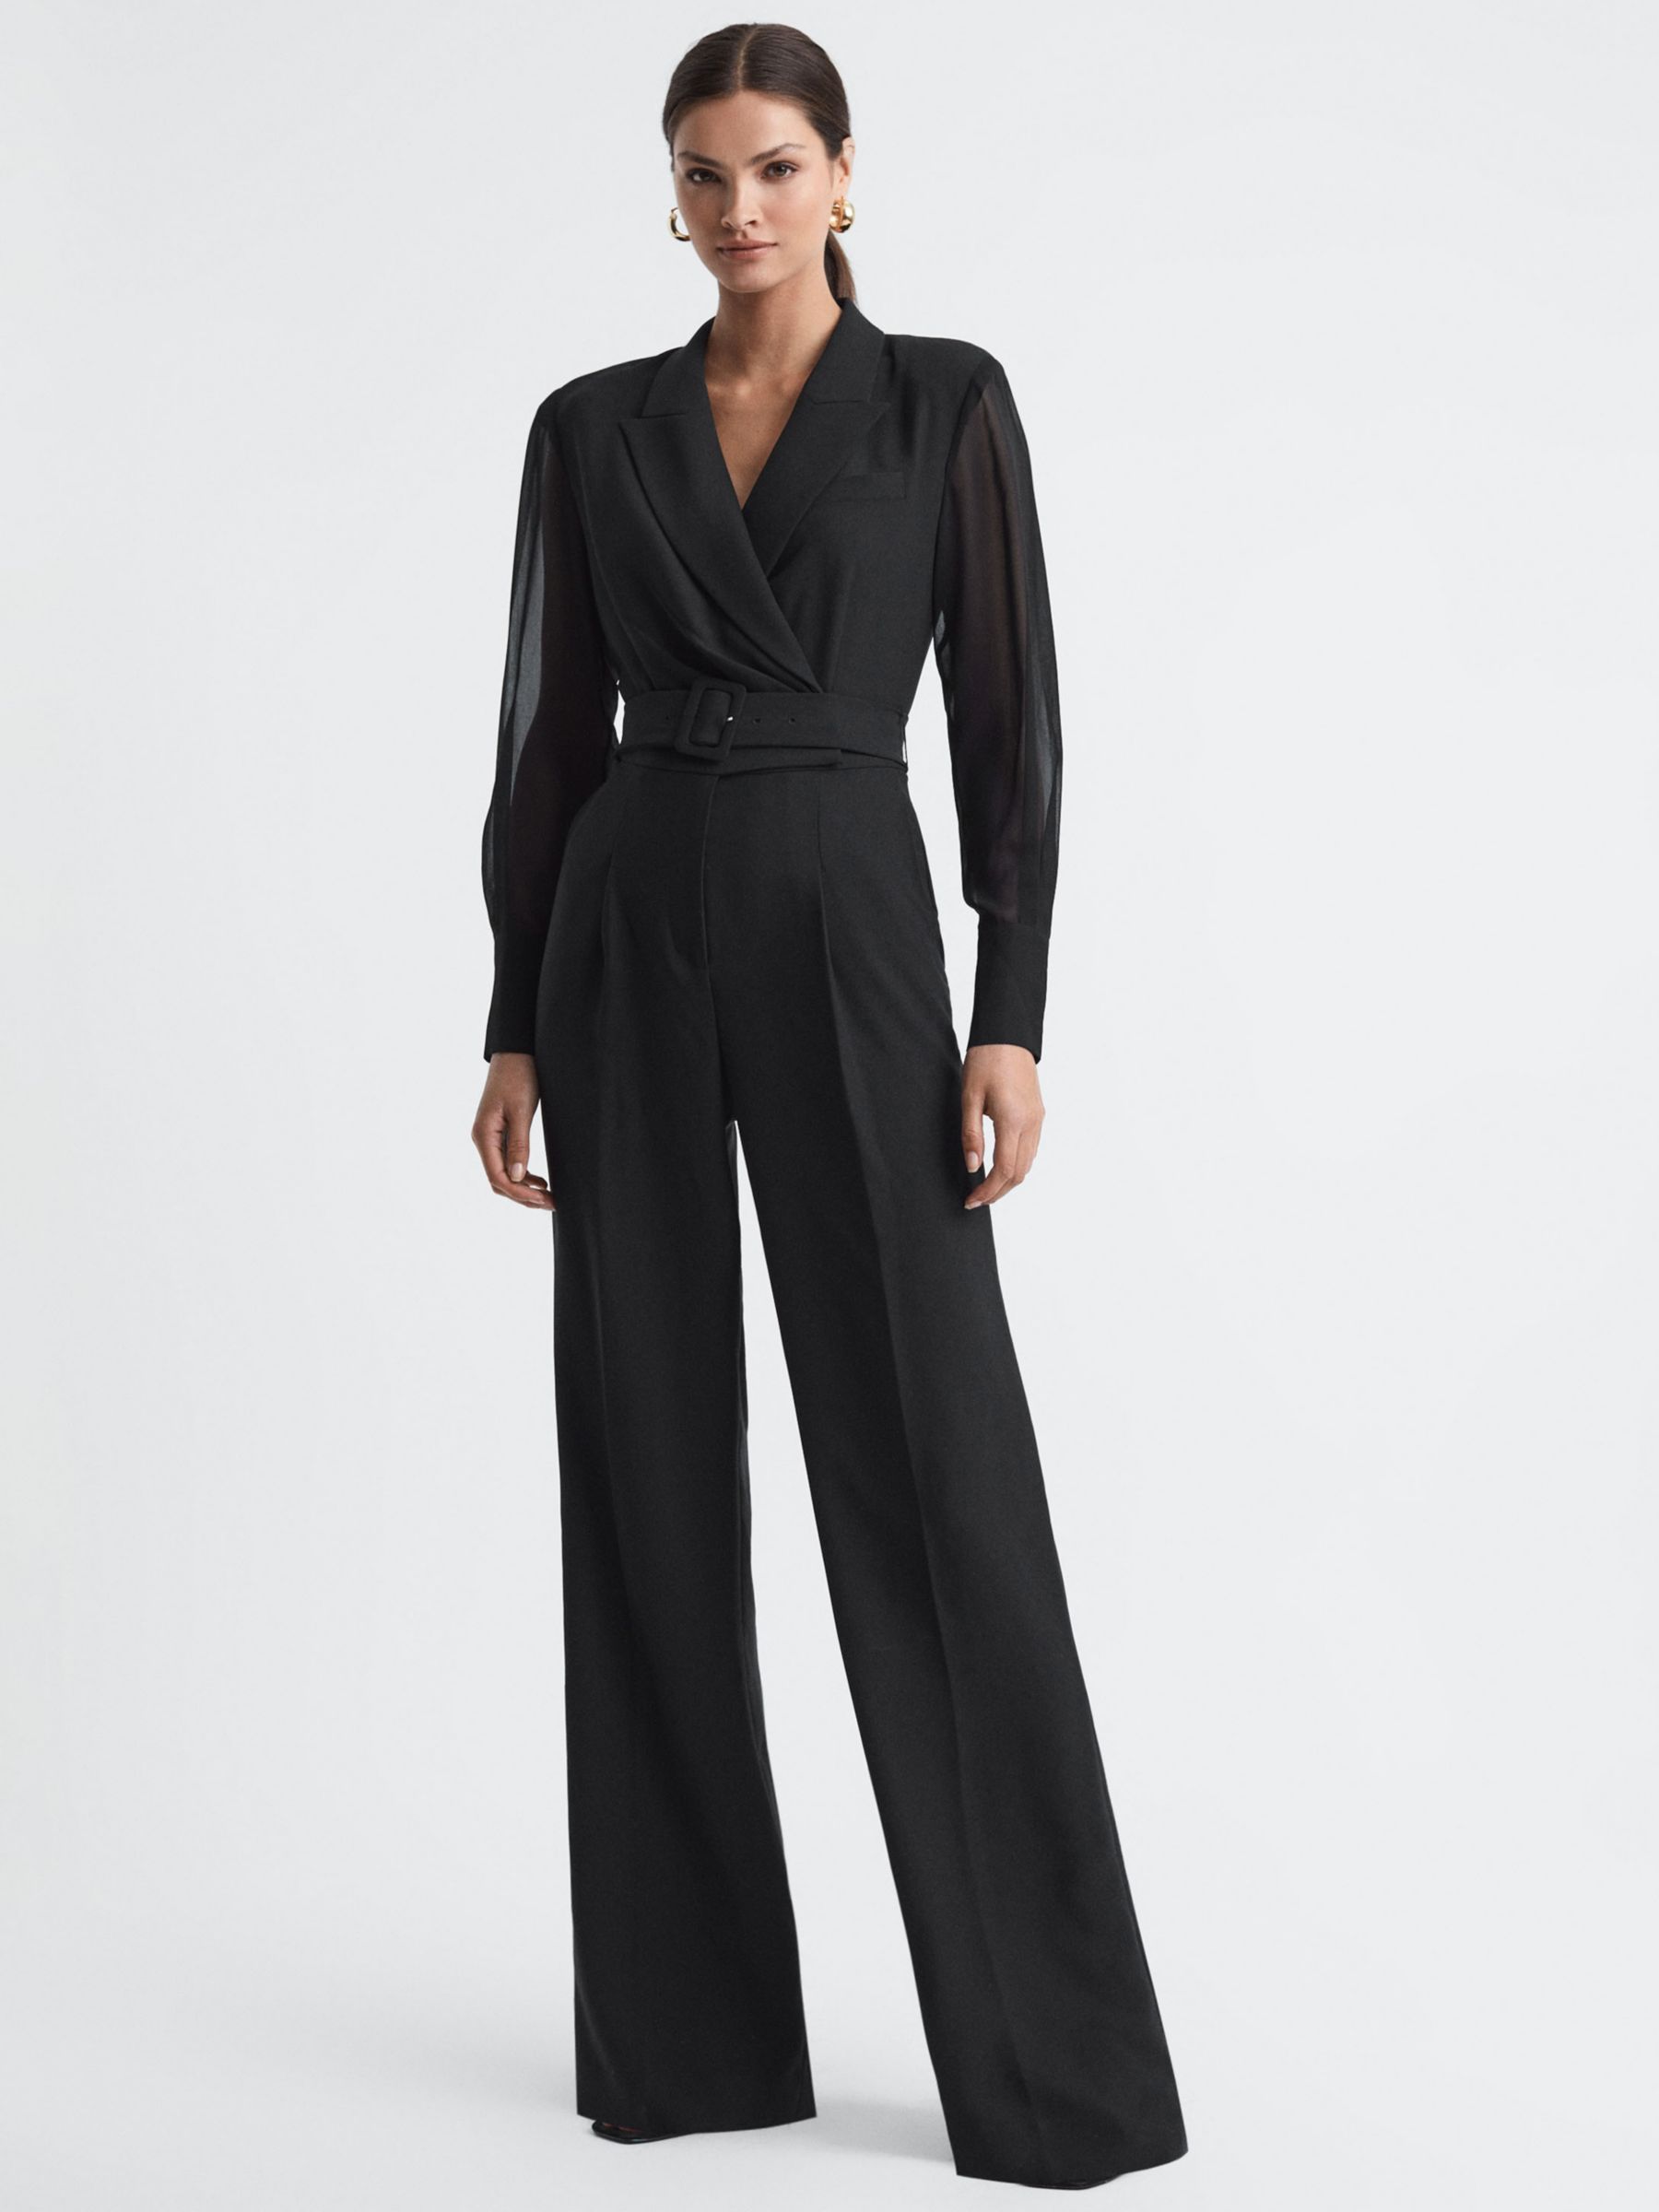 Reiss Flora Sheer Sleeve Belted Jumpsuit, Black at John Lewis & Partners